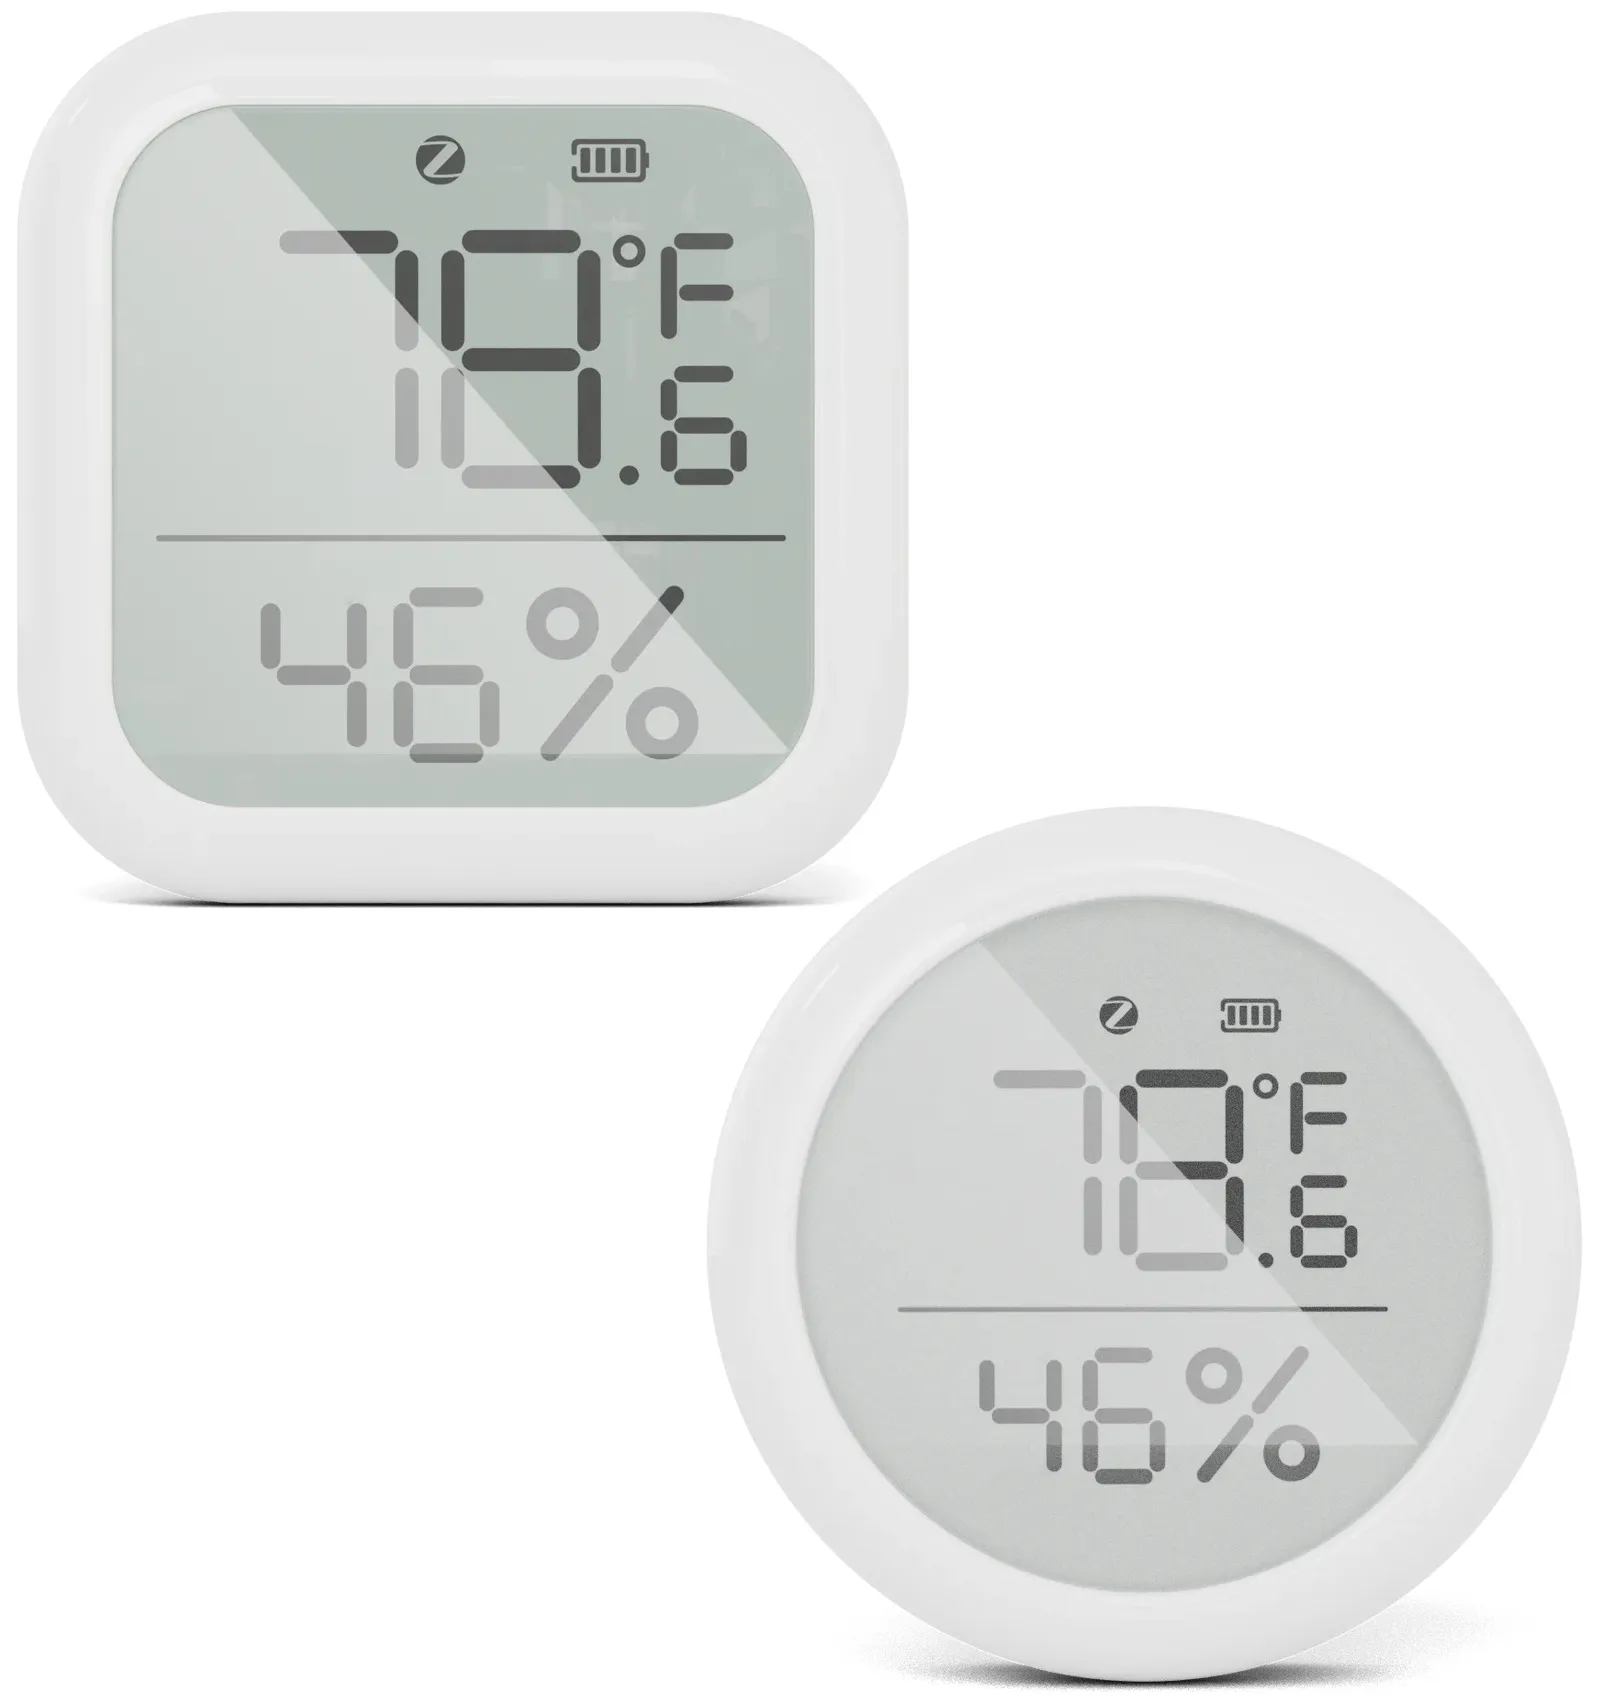 Tuya Temperature and Humidity Sensor with Display KCTW1Z Zigbee  compatibility